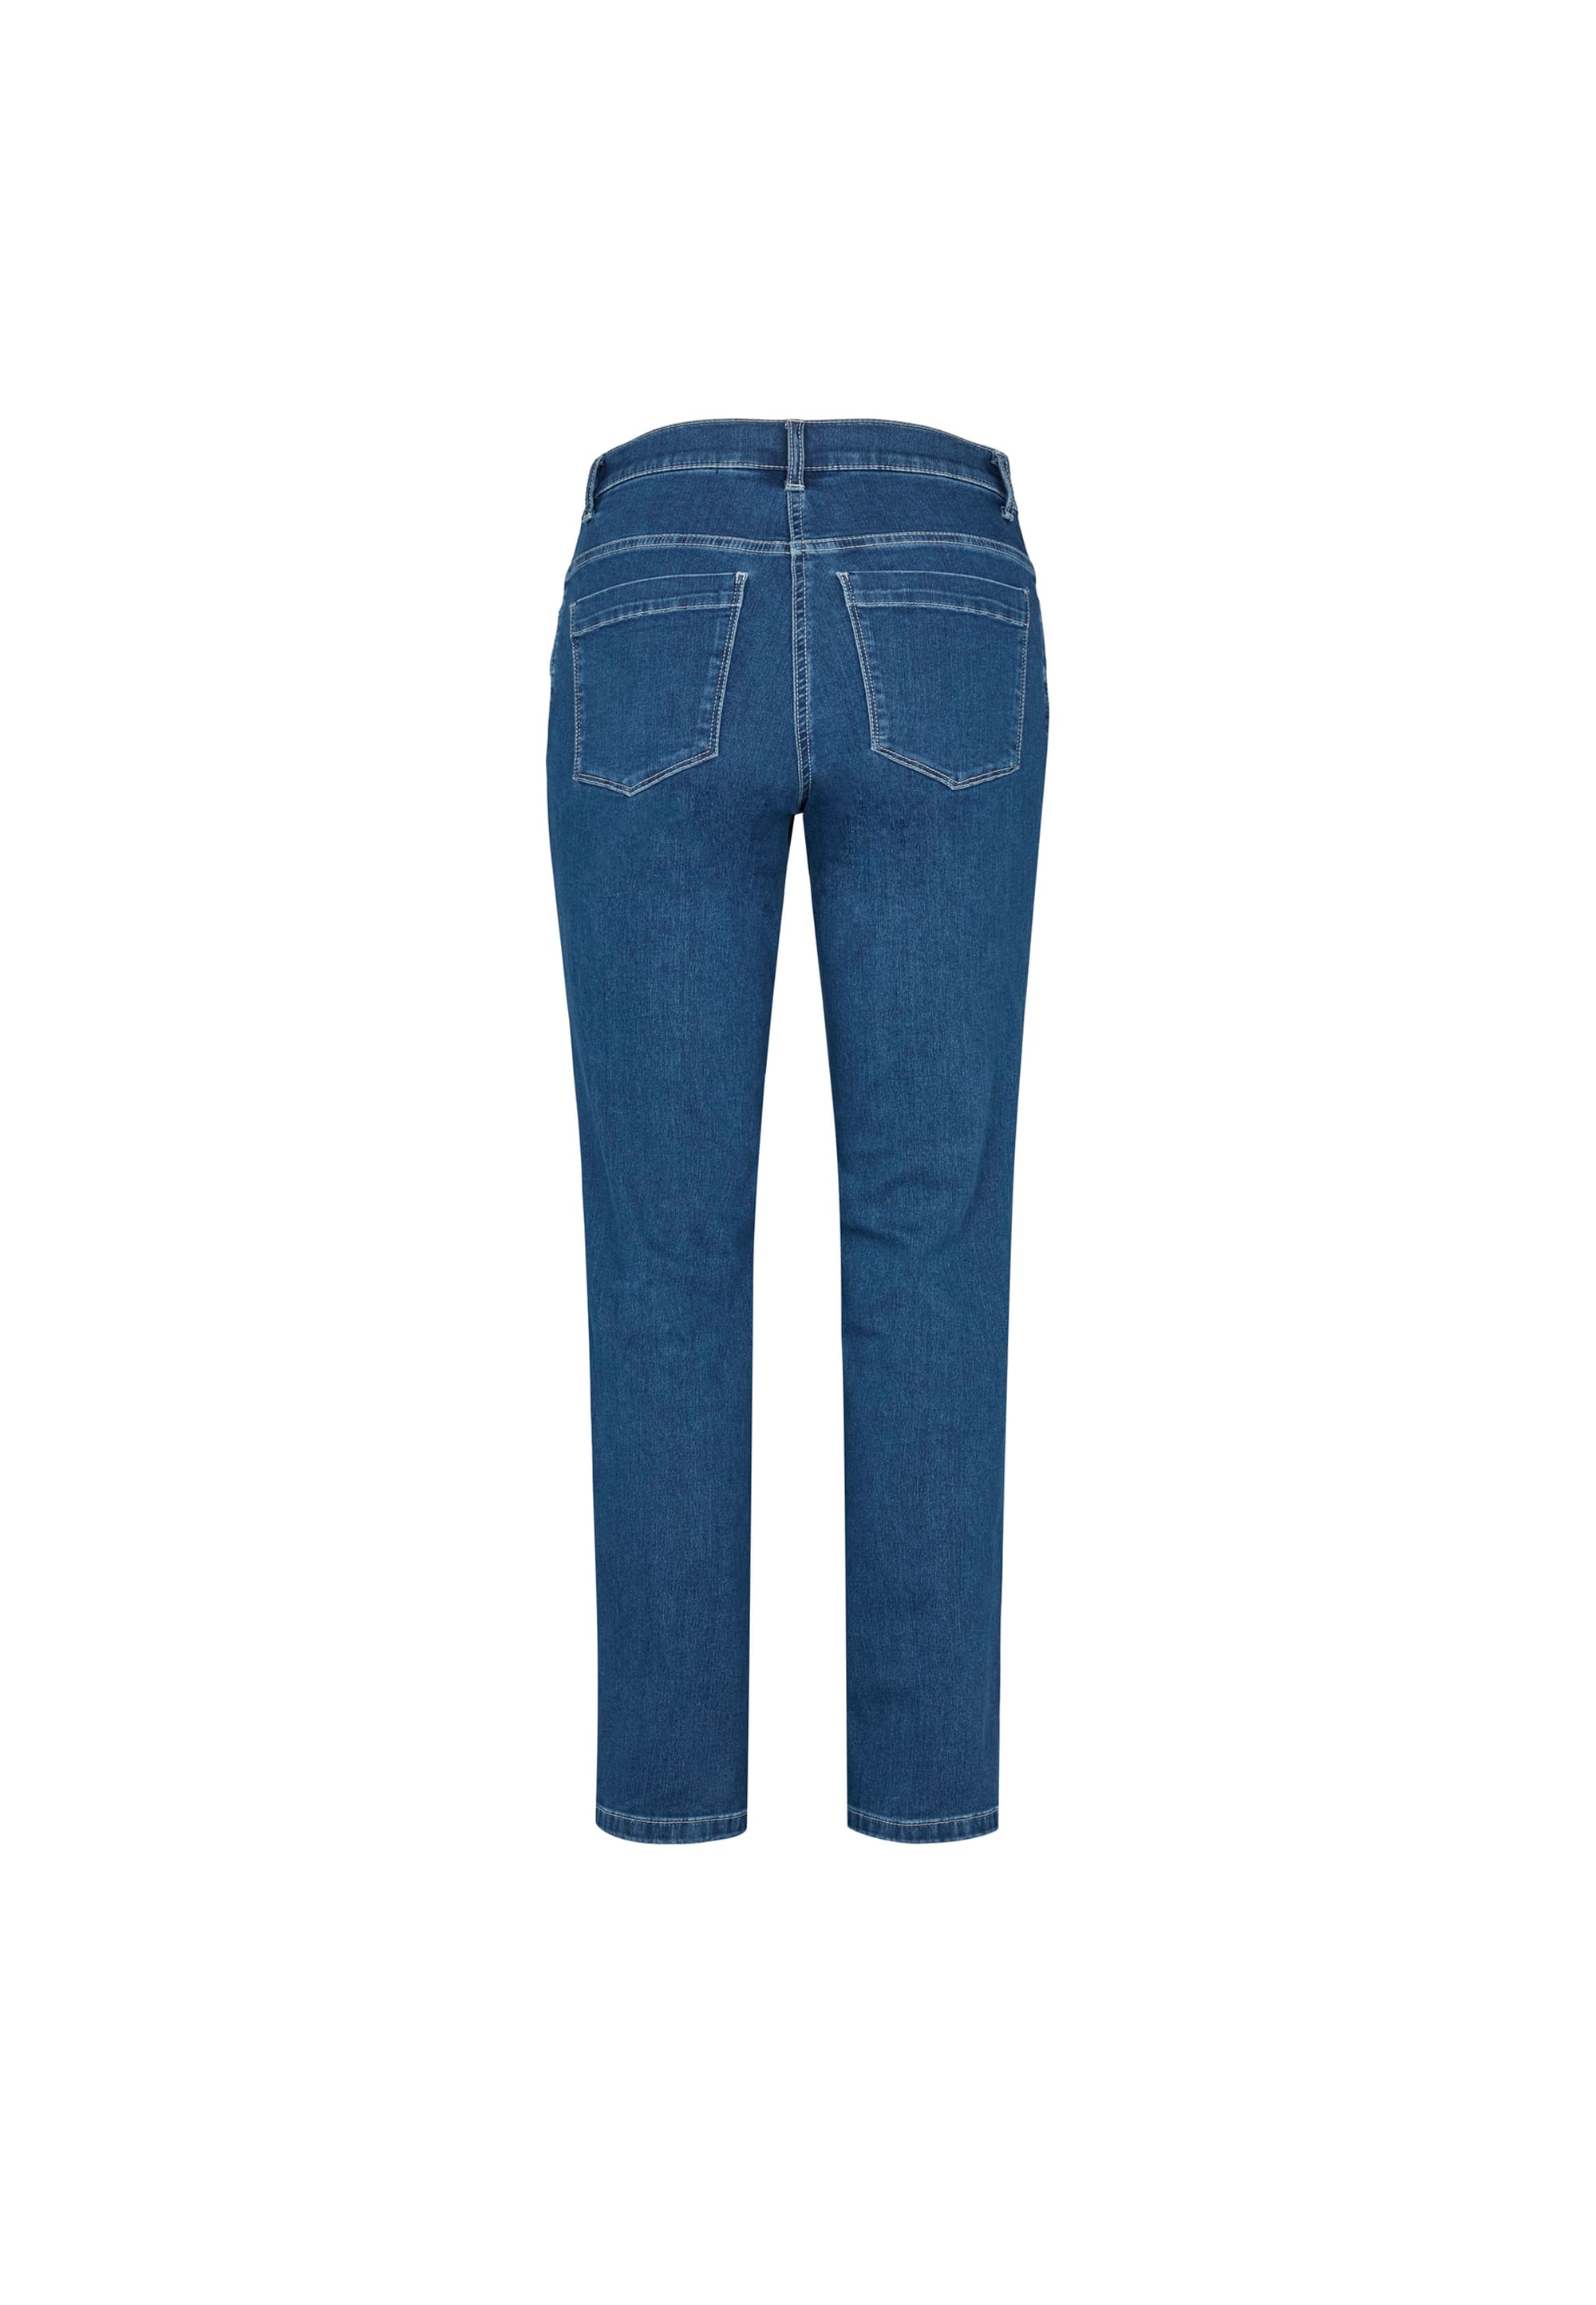 LAURIE Charlotte Regular - Medium Length Trousers REGULAR 49401 Blue Denim